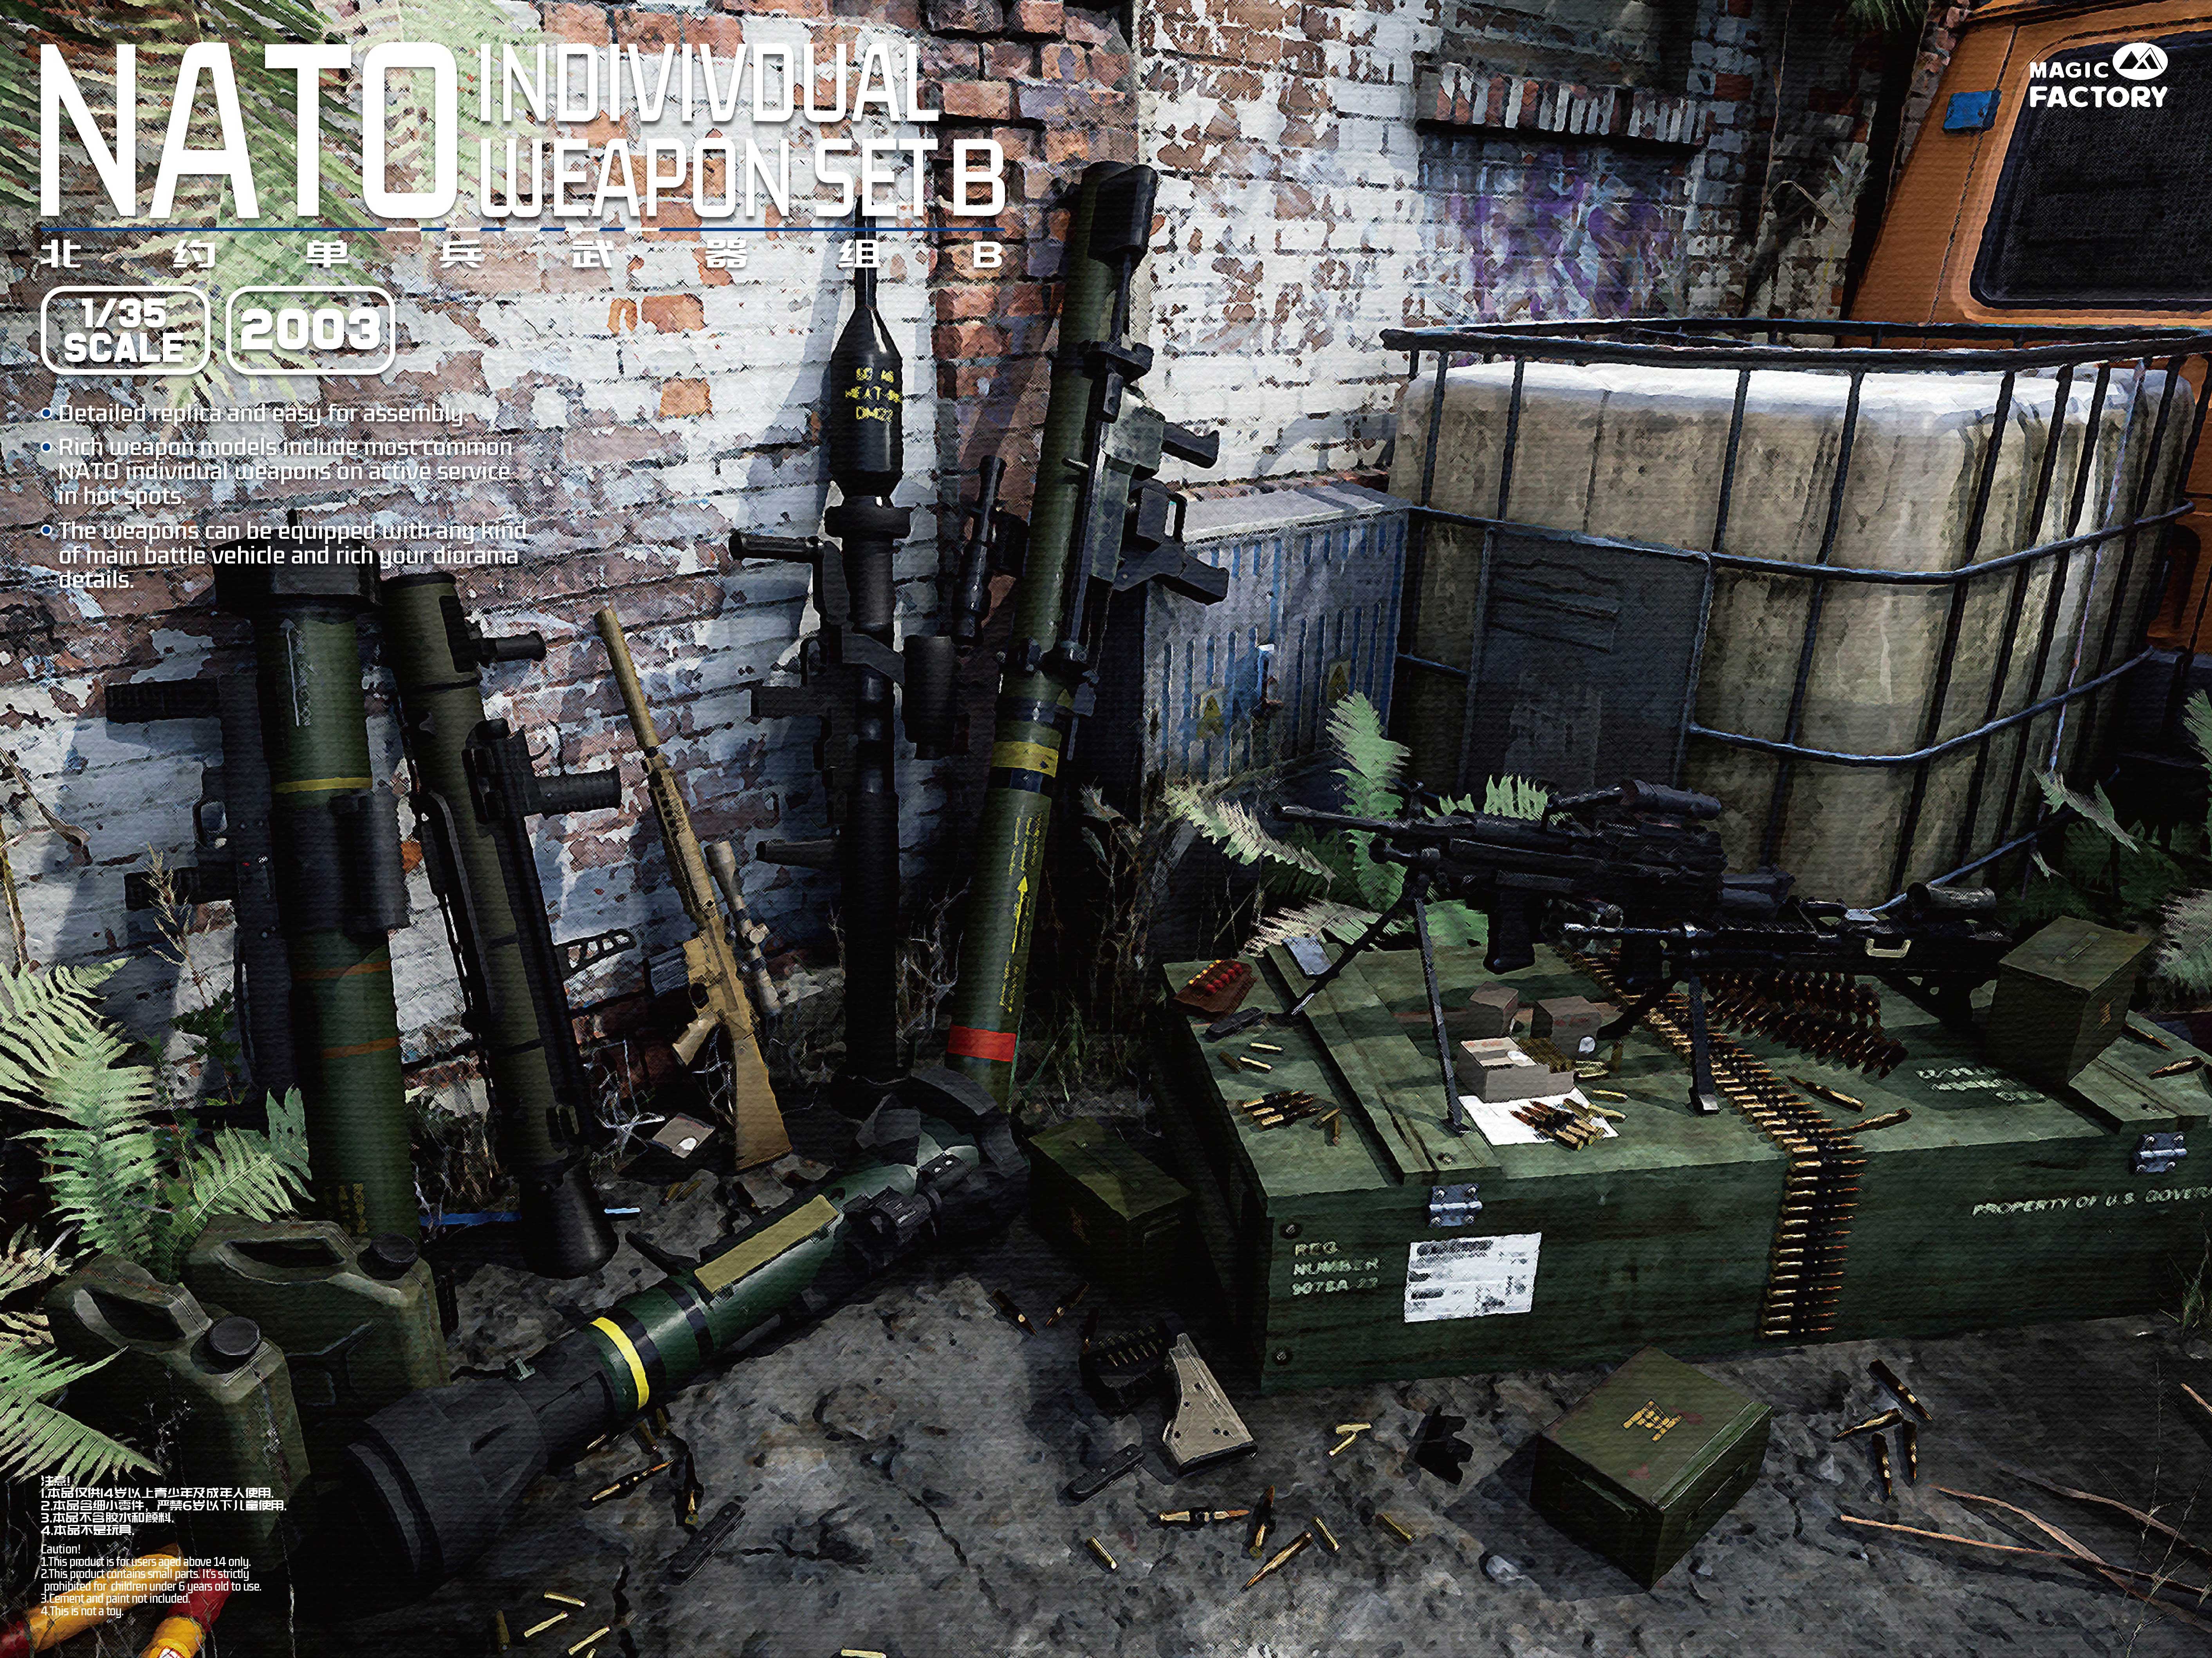 NATO Individual Weapon Set B 1/35 #2003 by Magic Factory